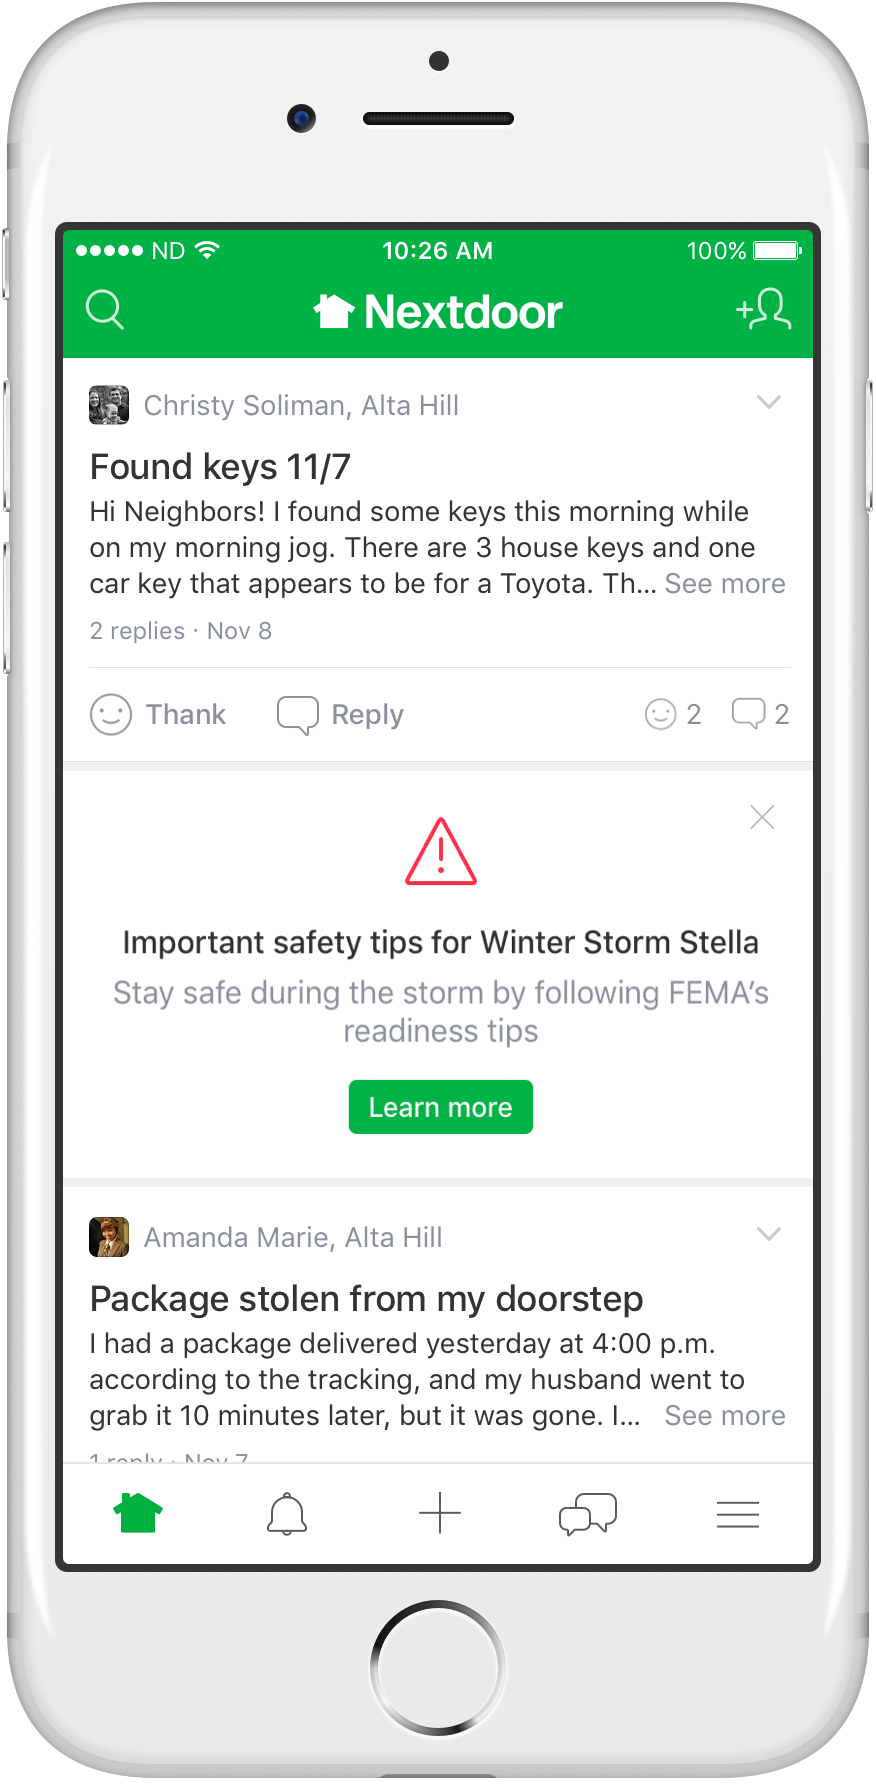 Nextdoor members will receive hyperlocal emergency preparedness information from FEMA in their Nextdoor neighborhoods on web and mobile devices.